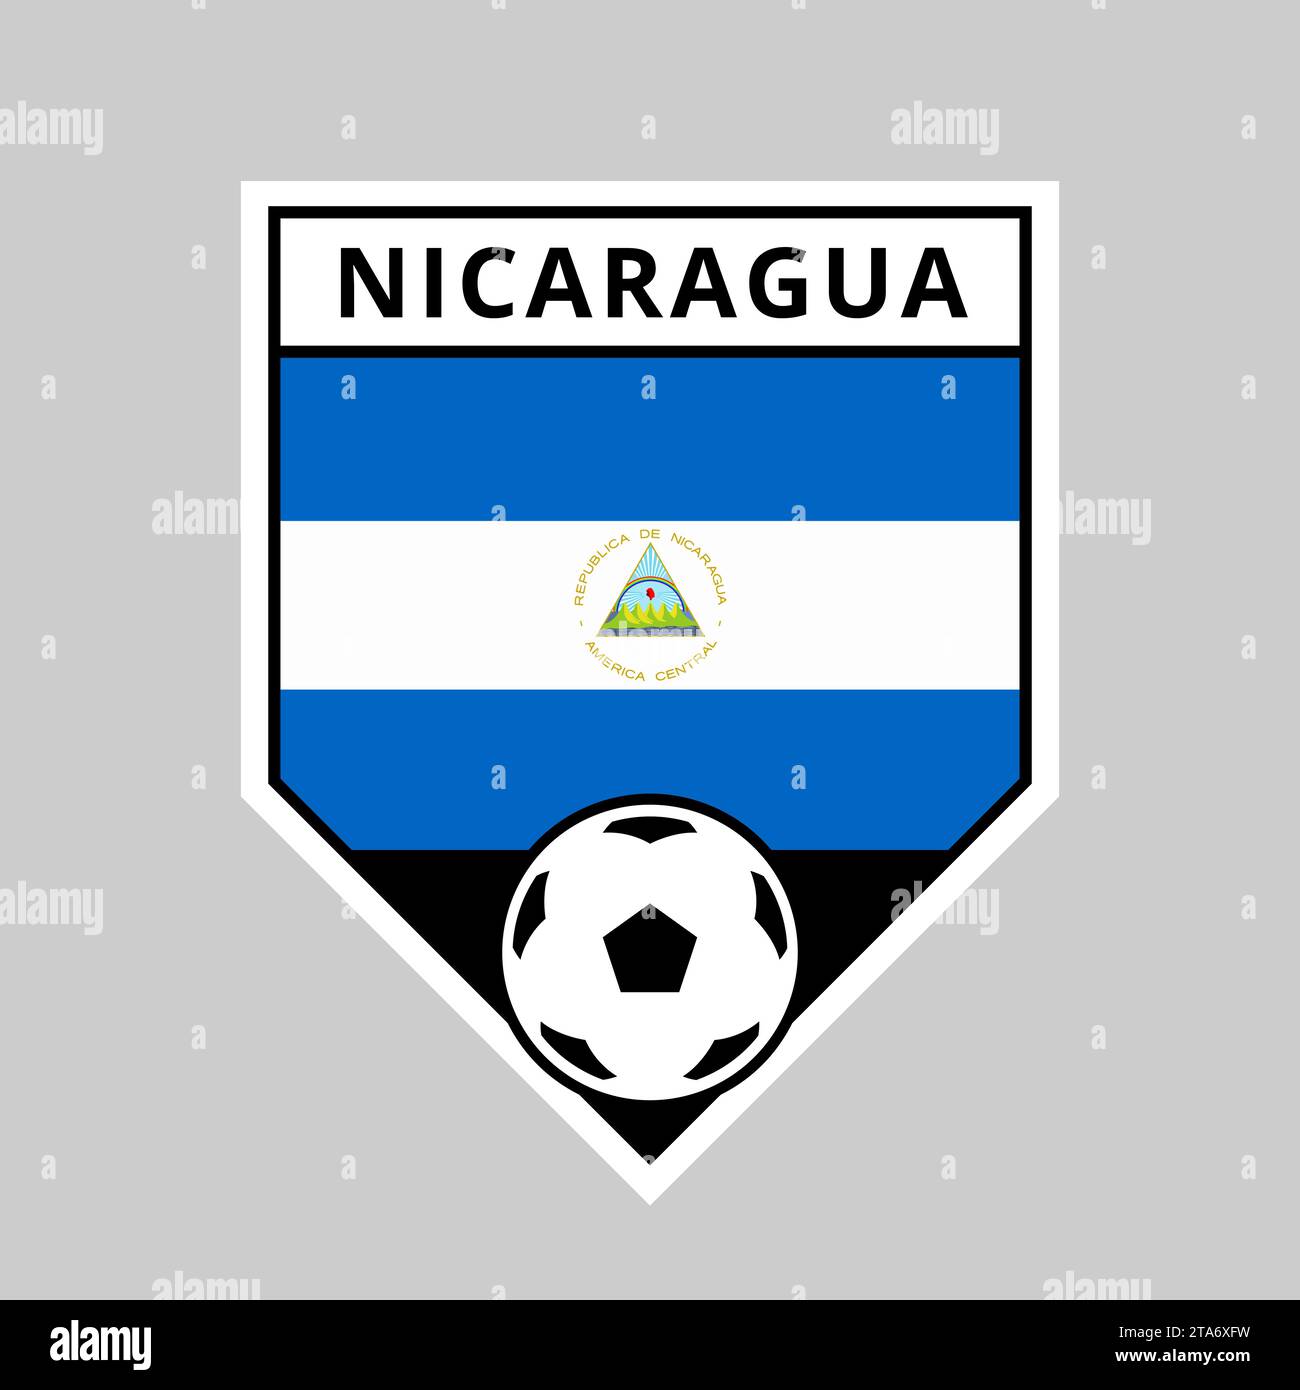 Illustration of Angled Shield Team Badge of Nicaragua for Football Tournament Stock Vector